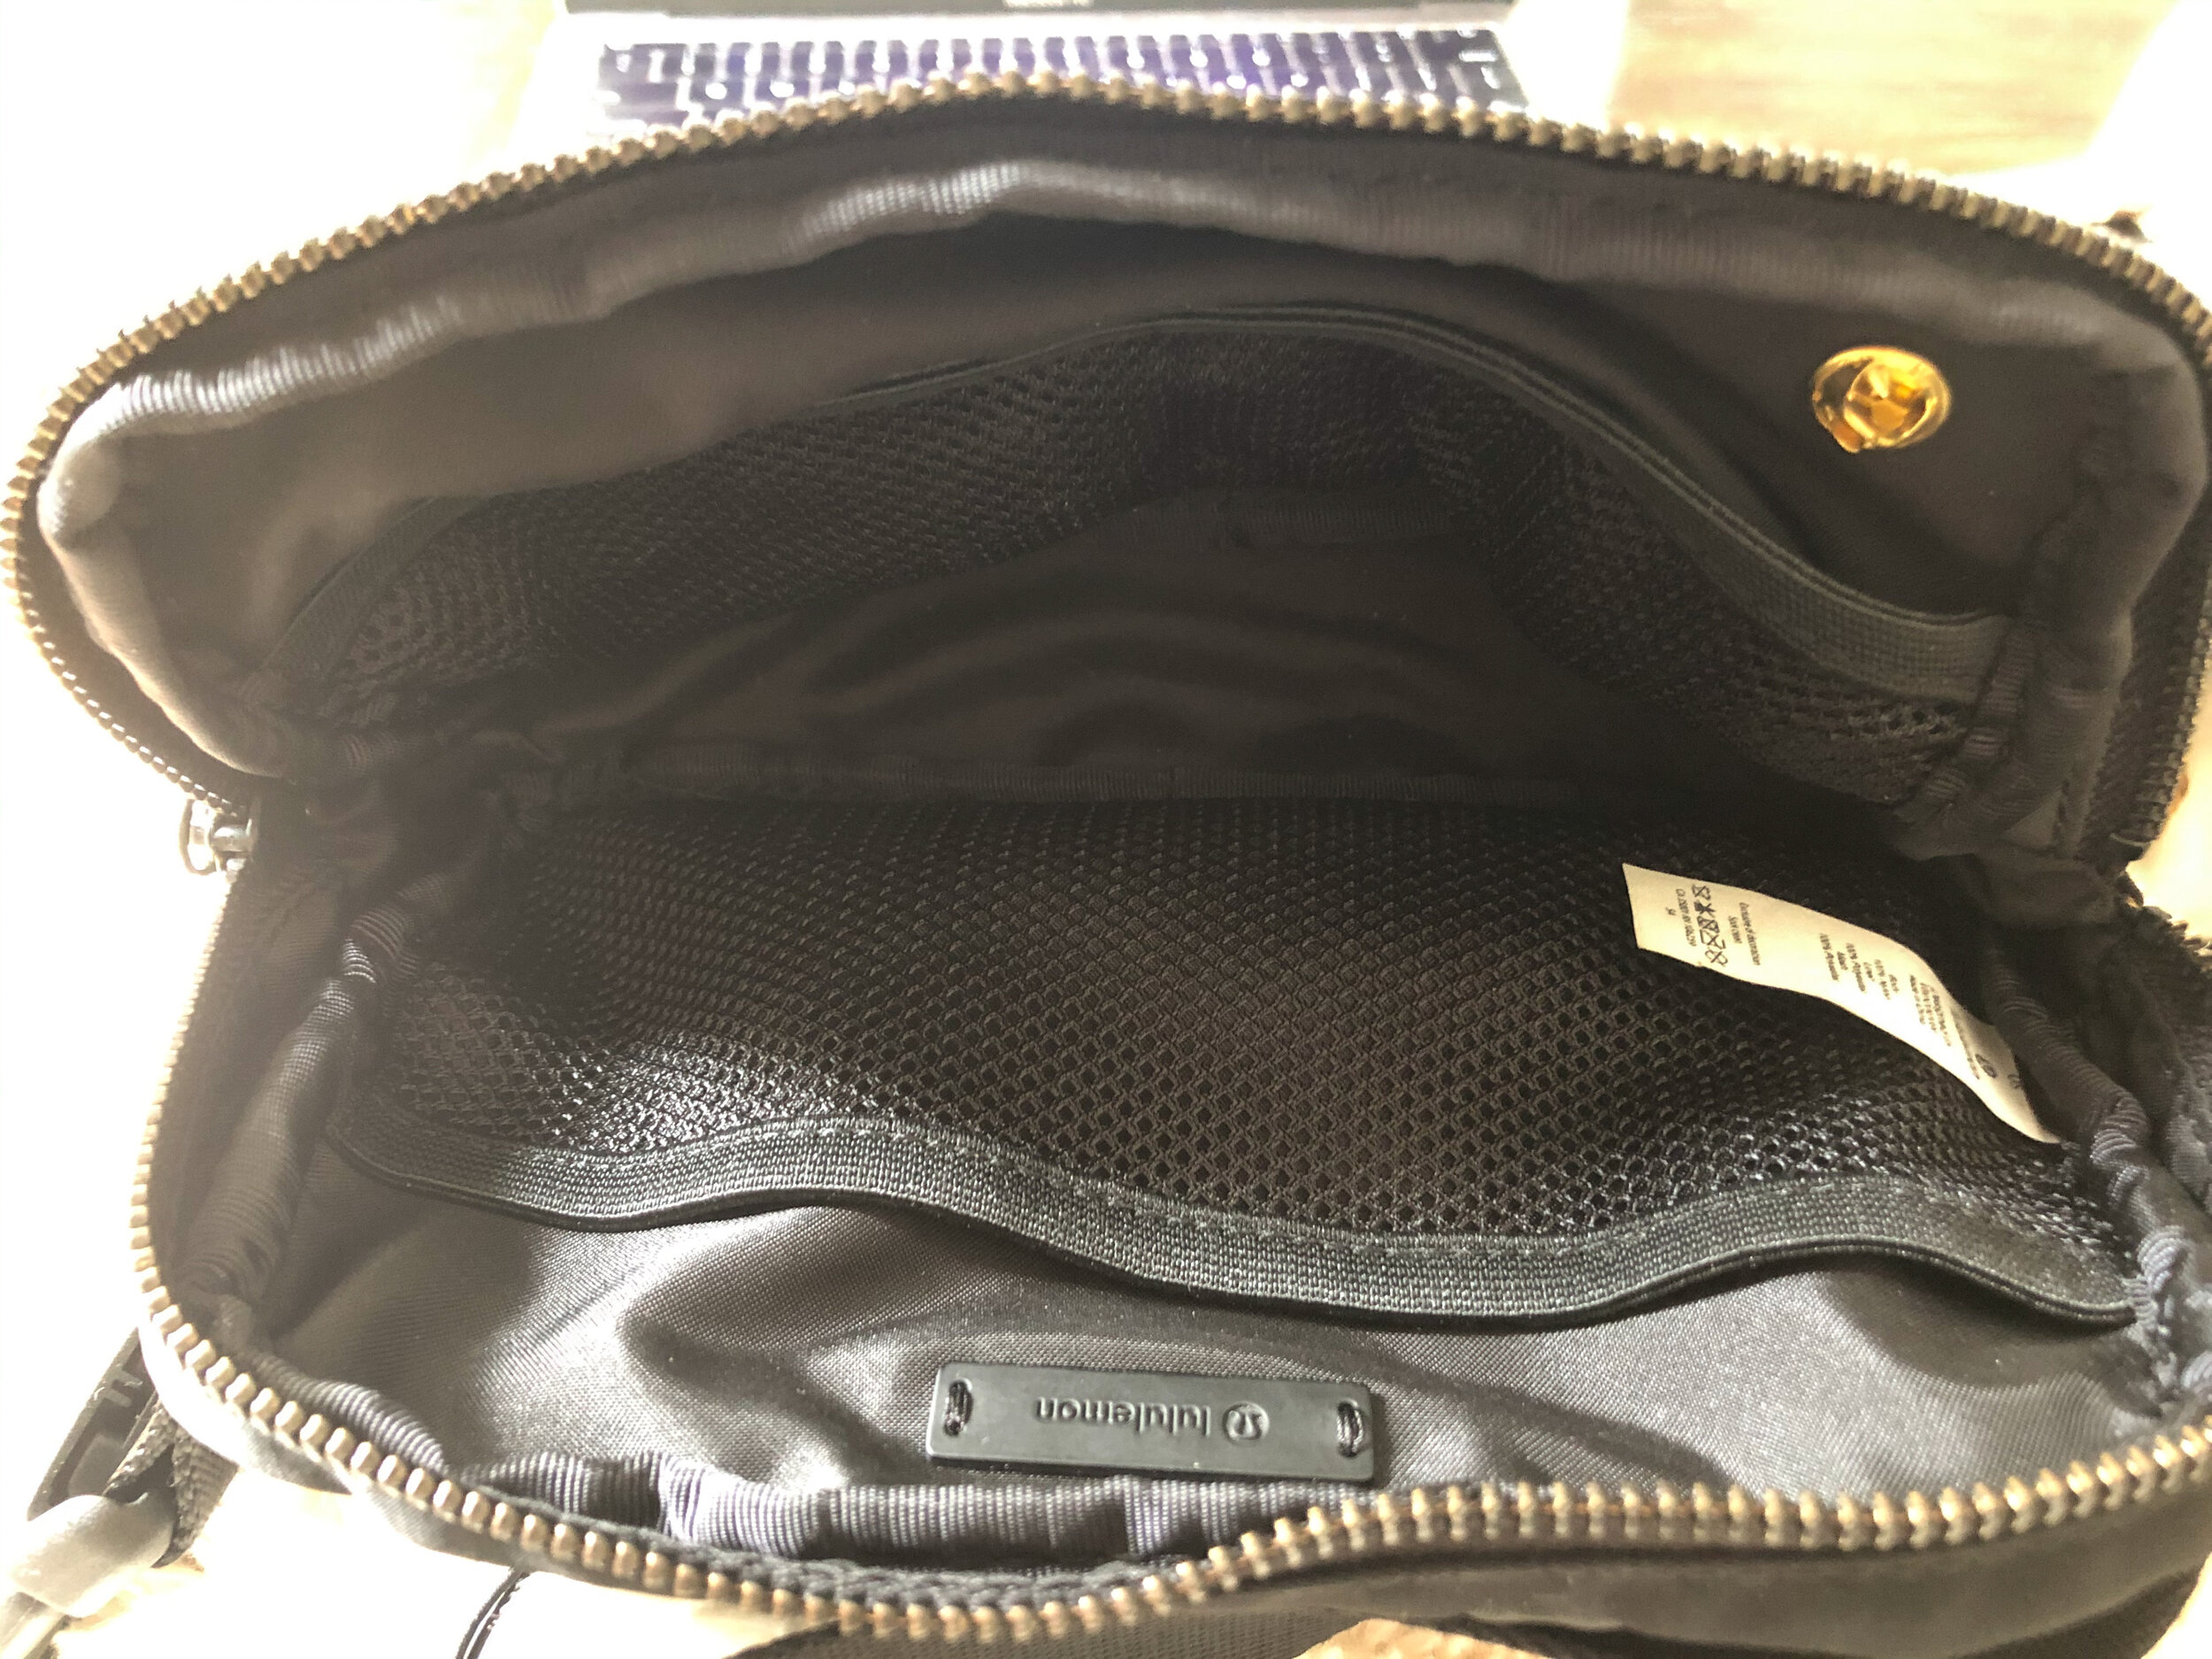 Lululemon Everywhere Belt Bag *1L Review: My #1 Essential